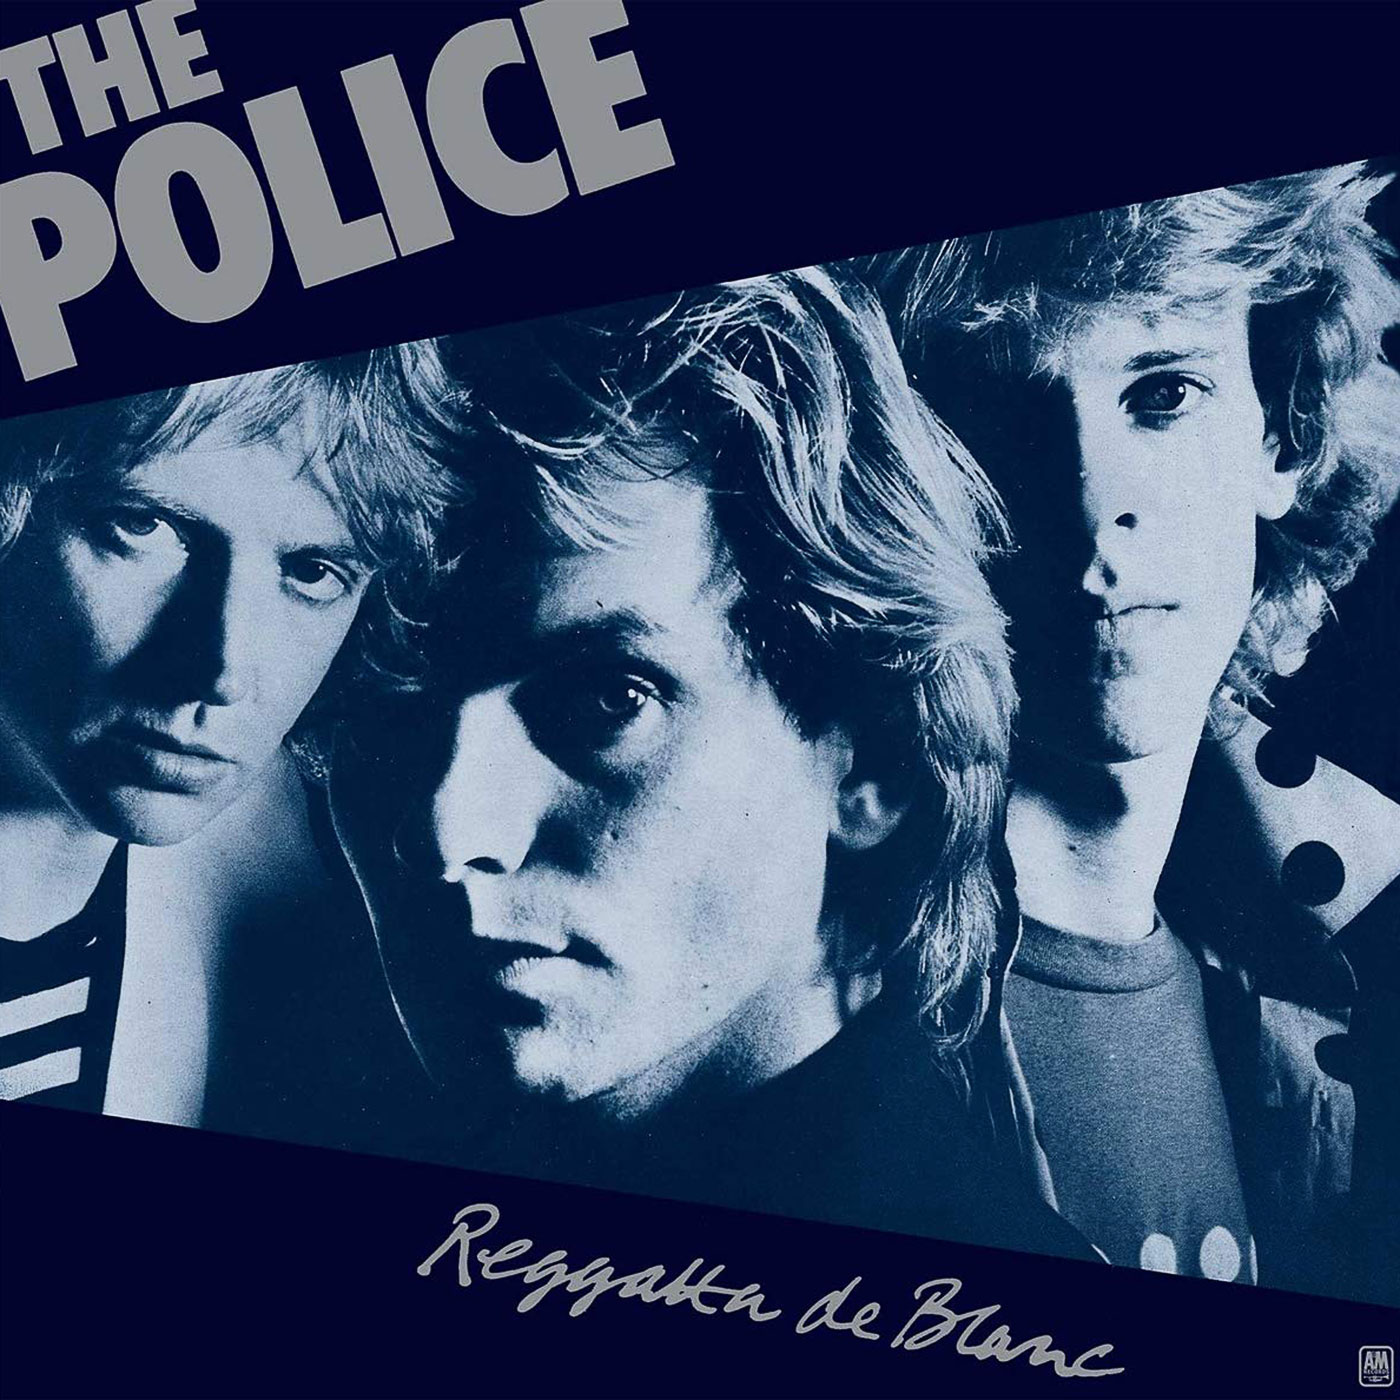 433 The Police – Reggatta De Blanc